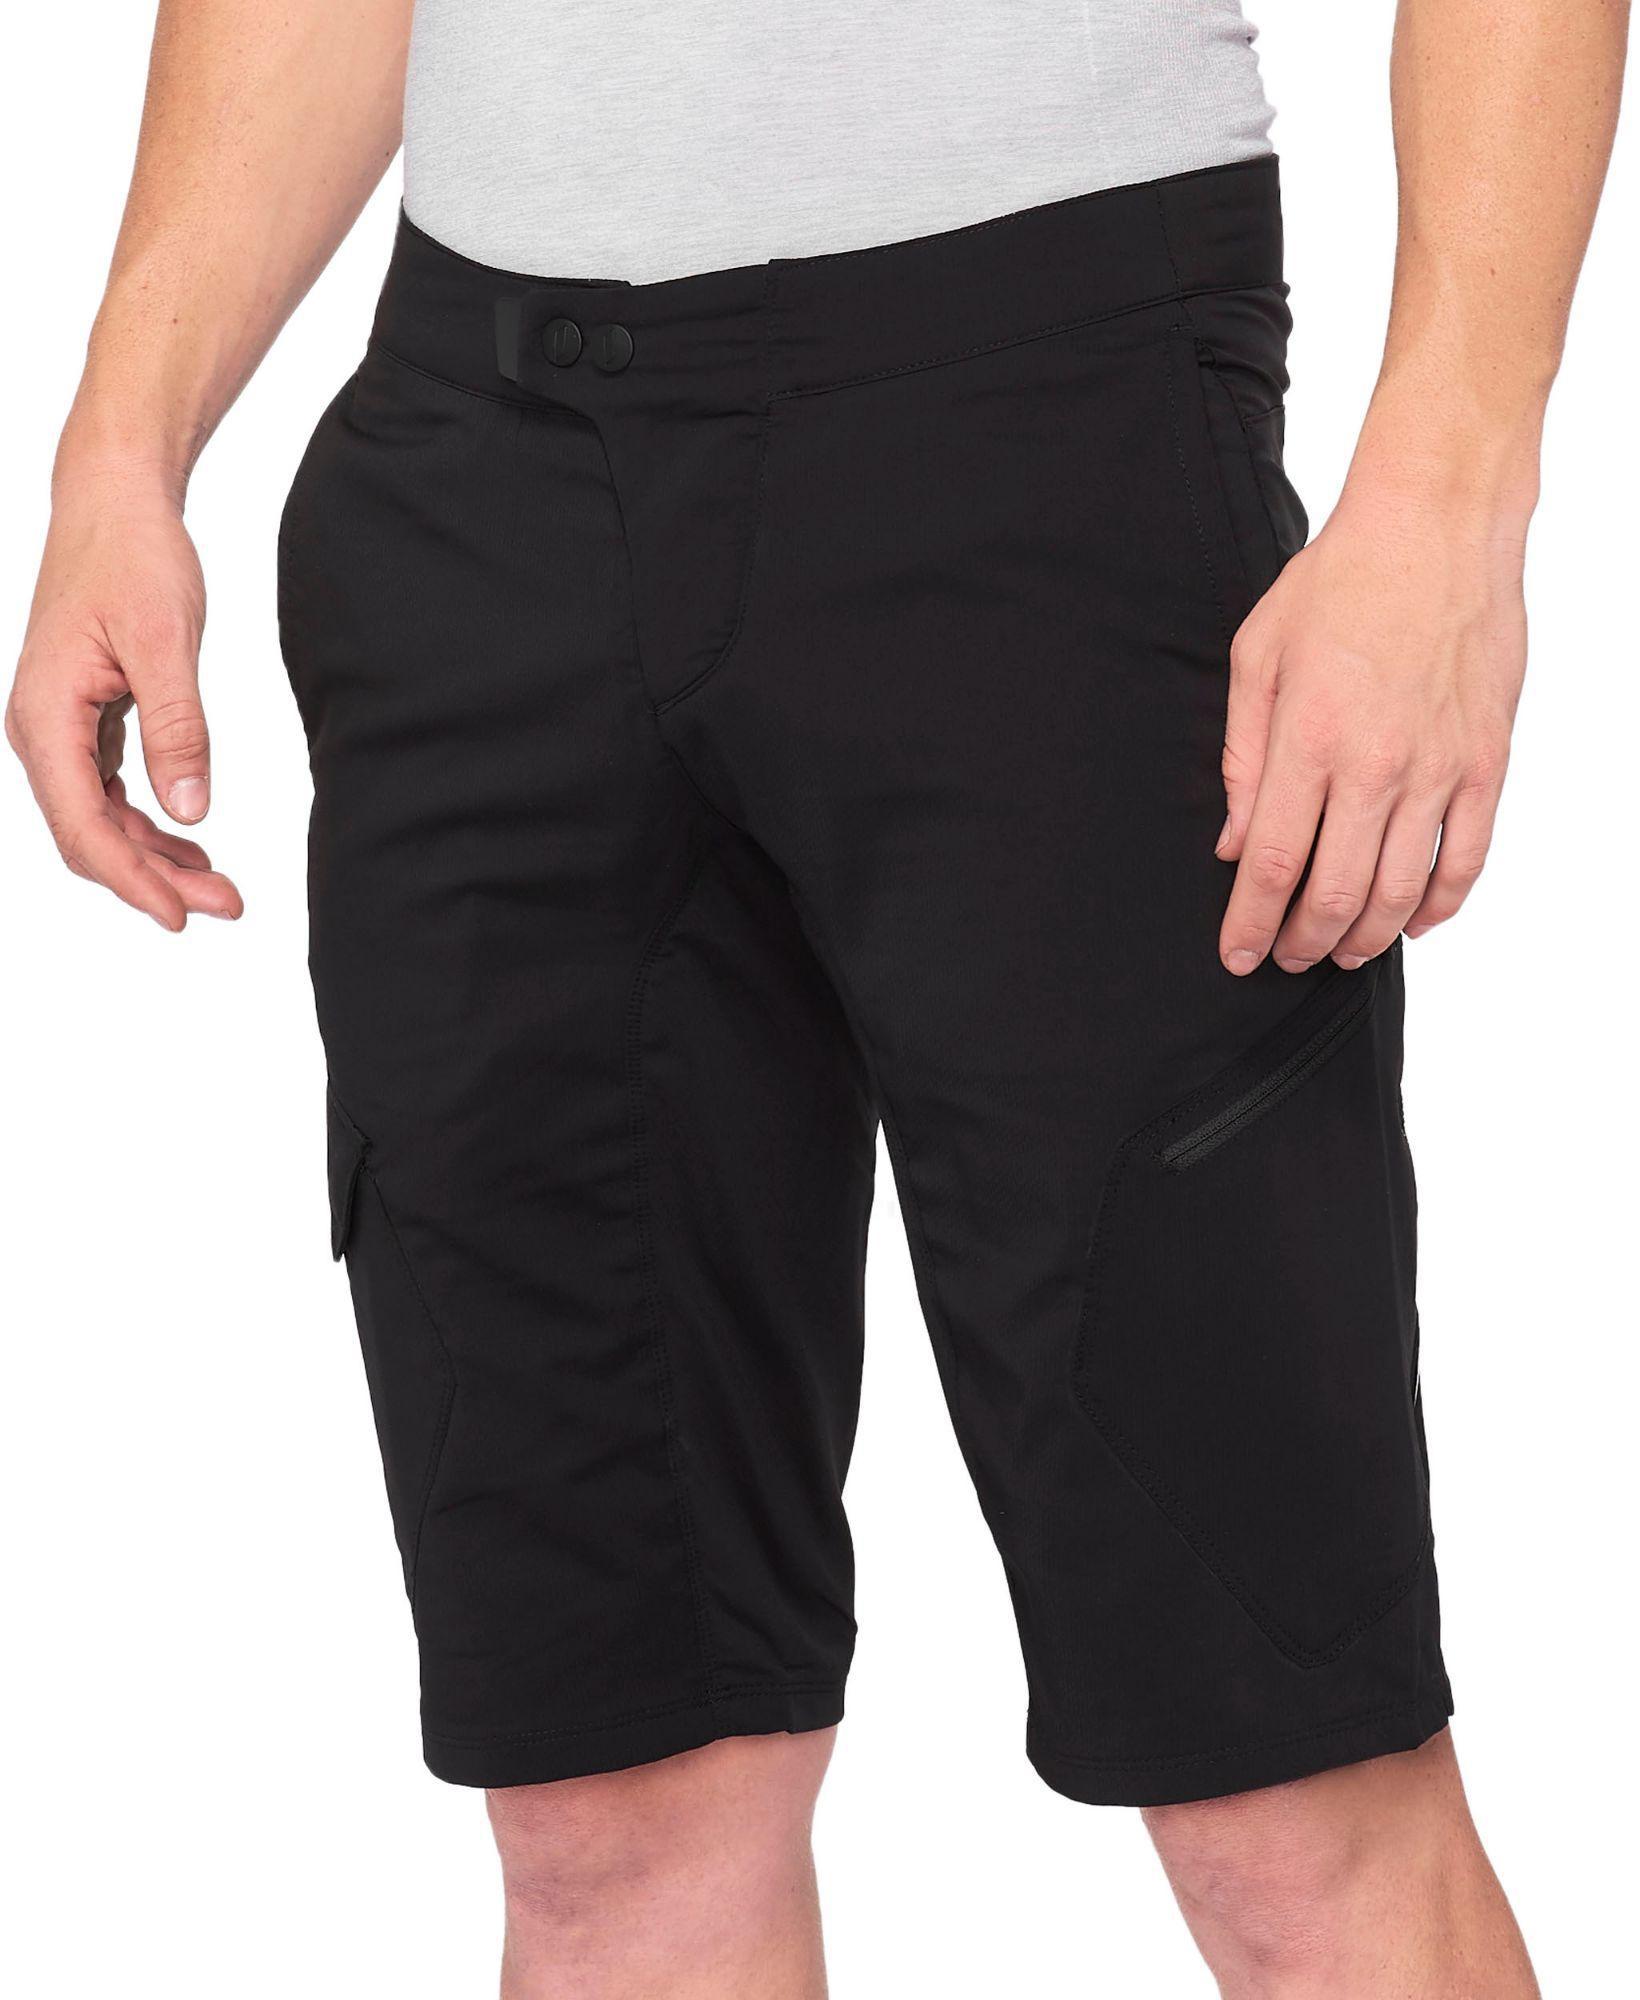 100% Ridecamp Shorts - Black